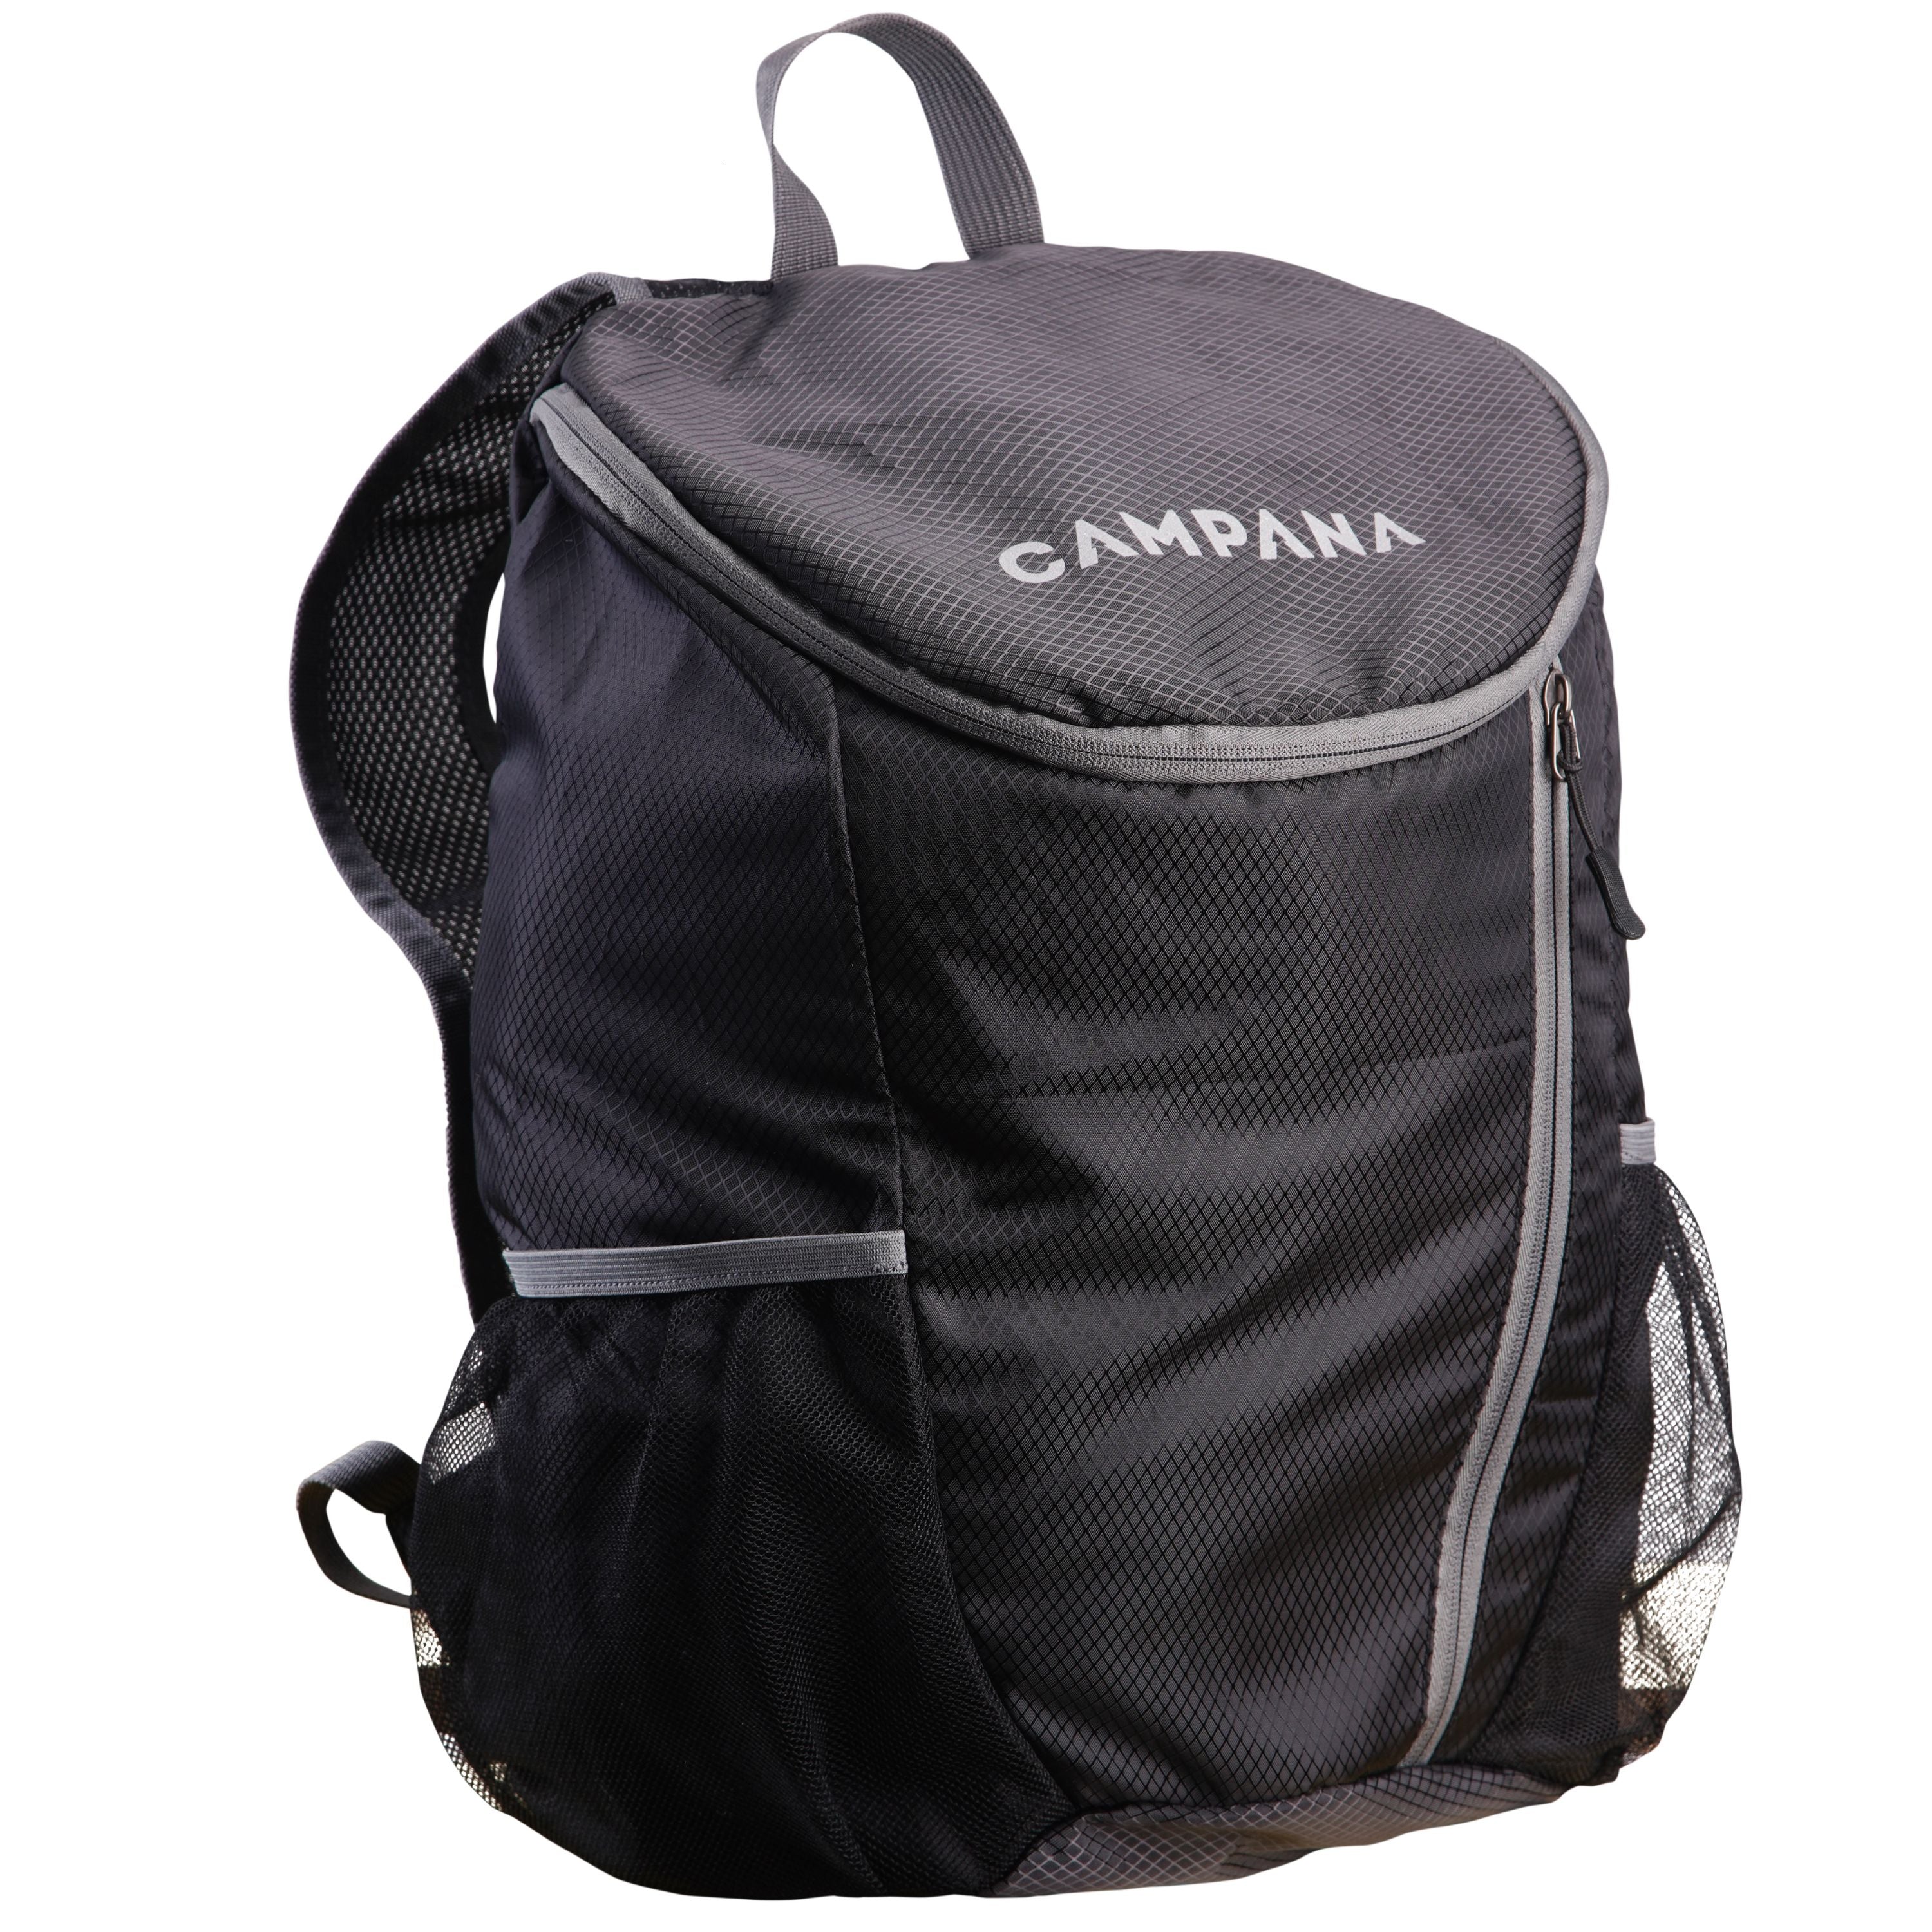 Sac à dos ultraléger||Ultra light backpack